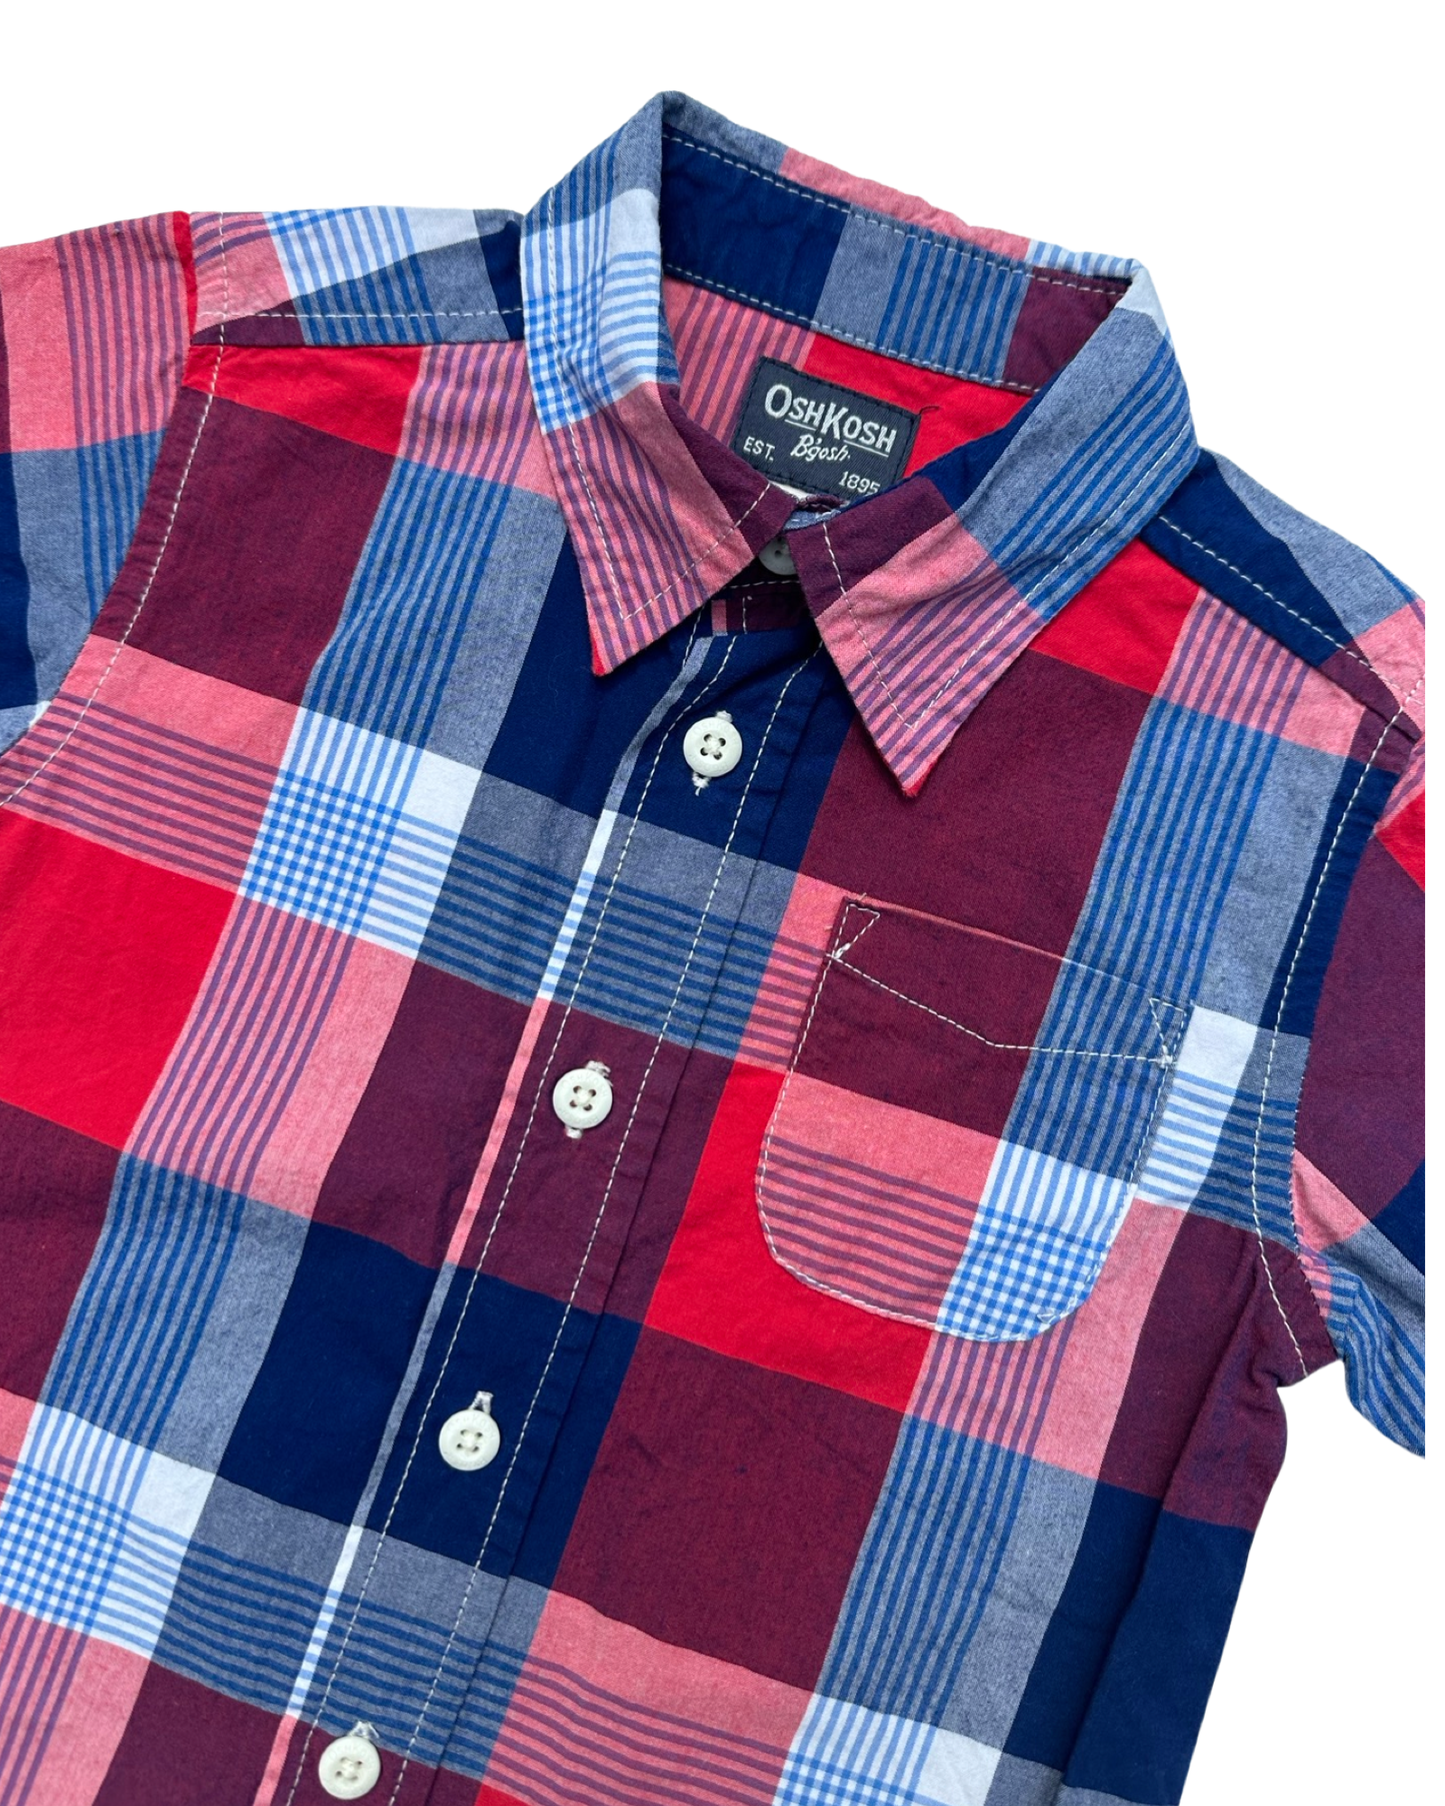 Osh Kosh short sleeve checked shirt (size 12-18mths)